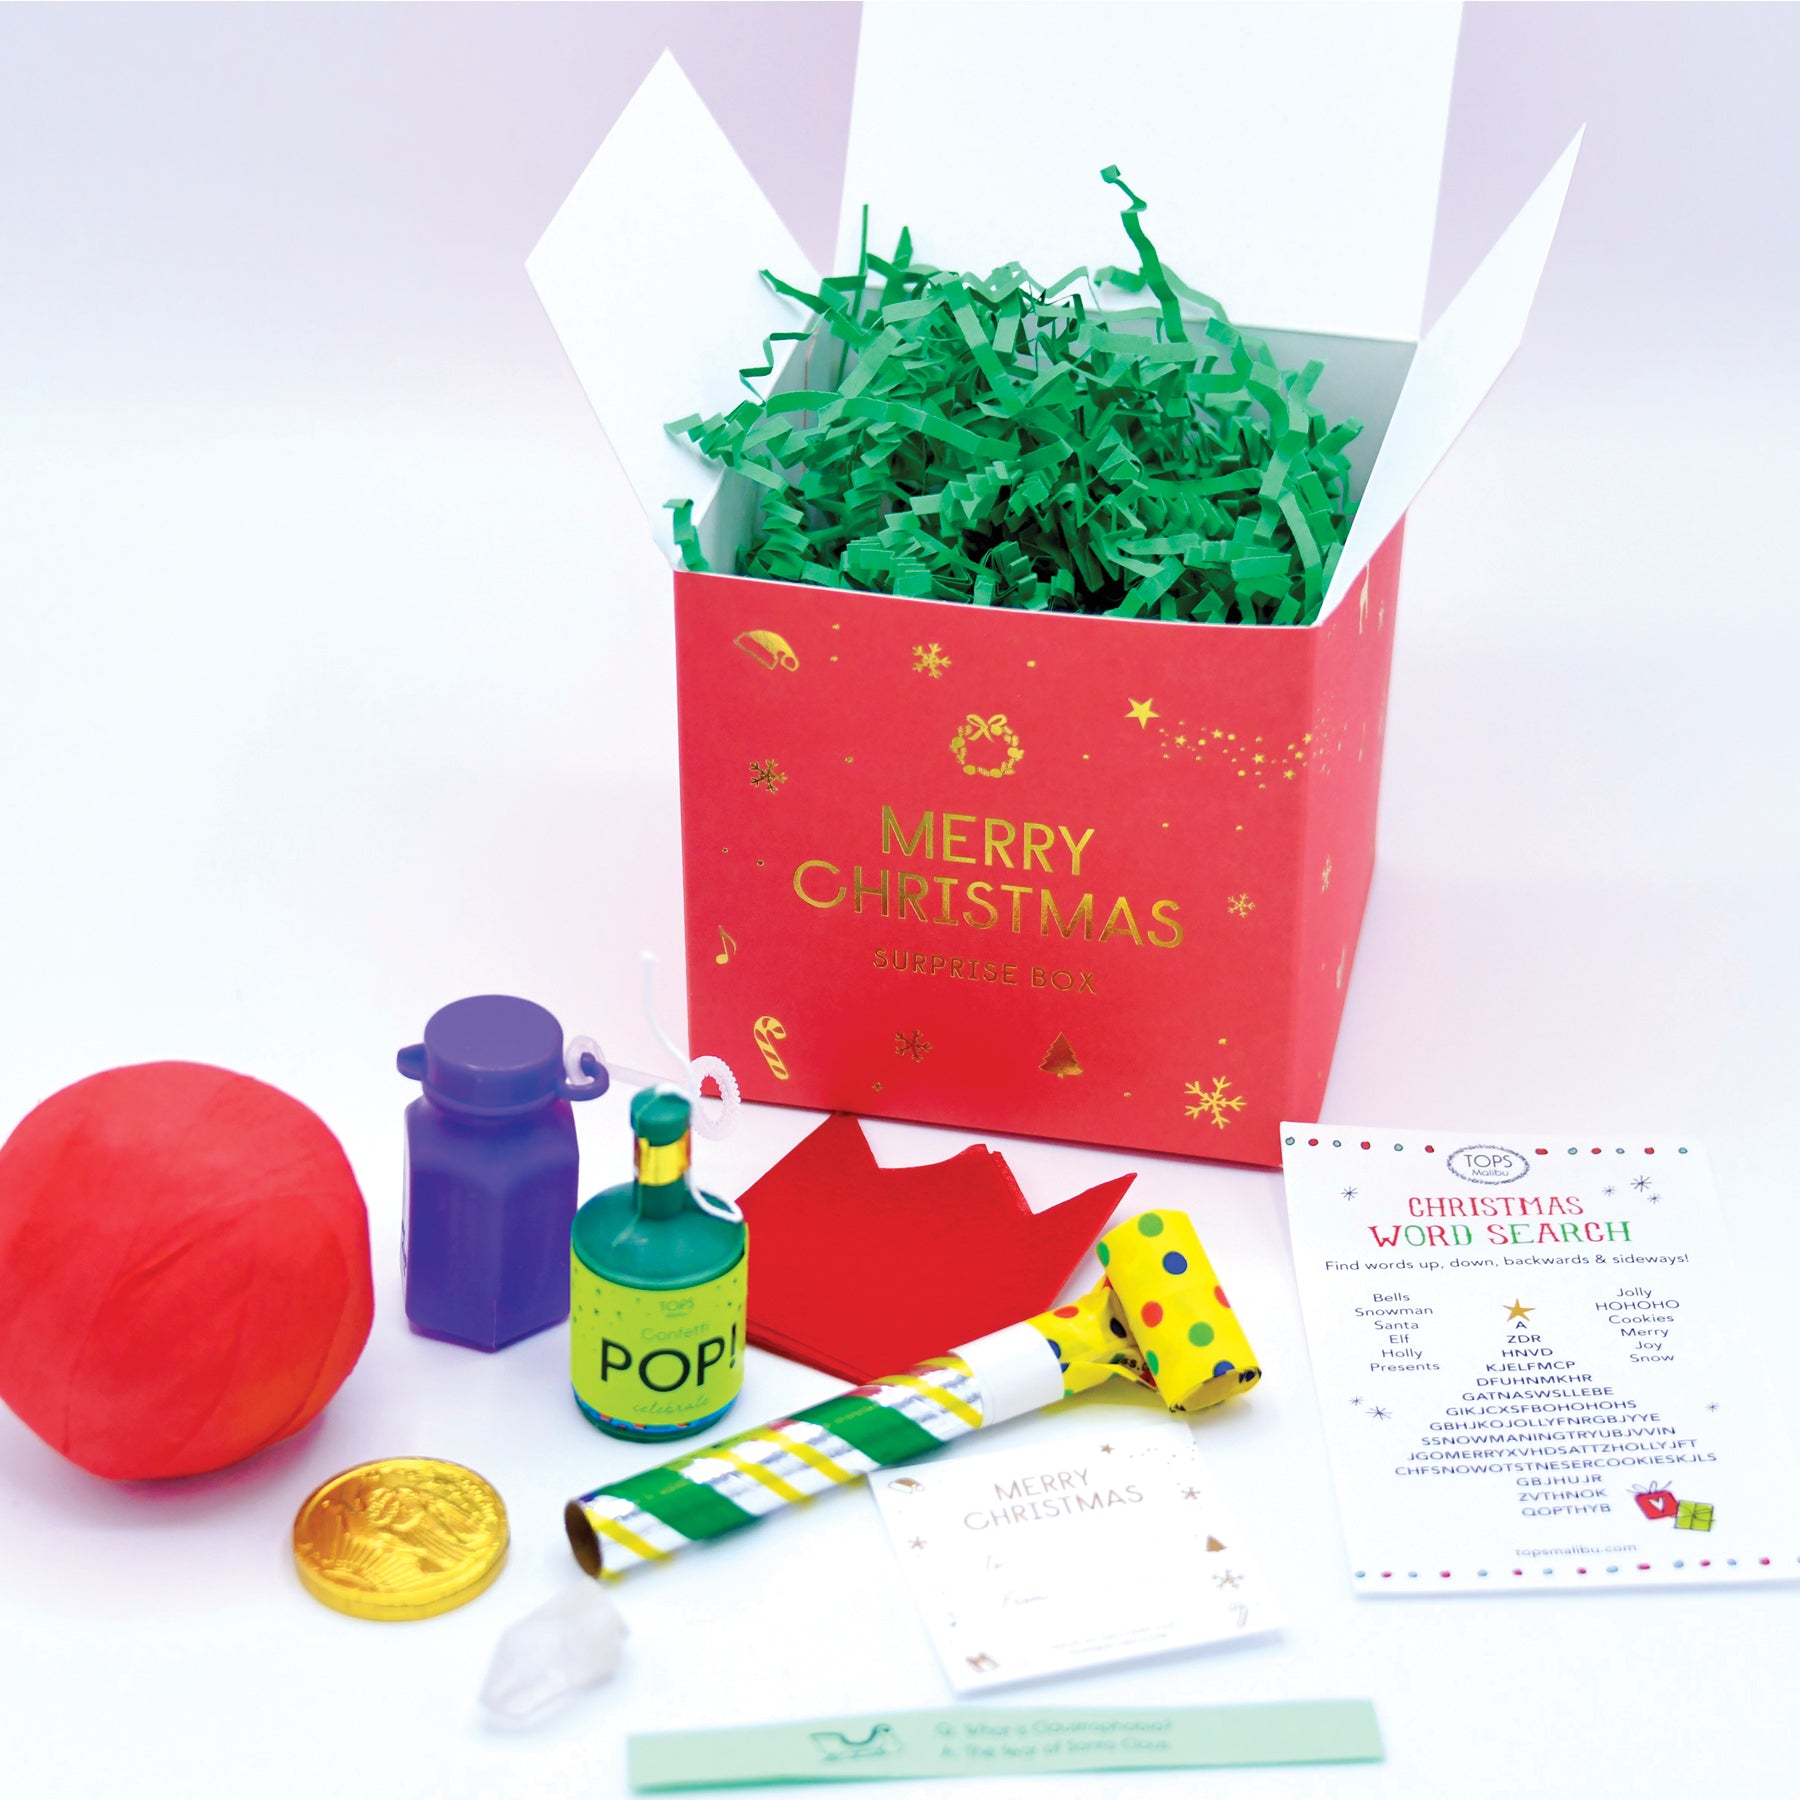 Merry Christmas Holiday Box with 7 Gifts - TOPS Malibu